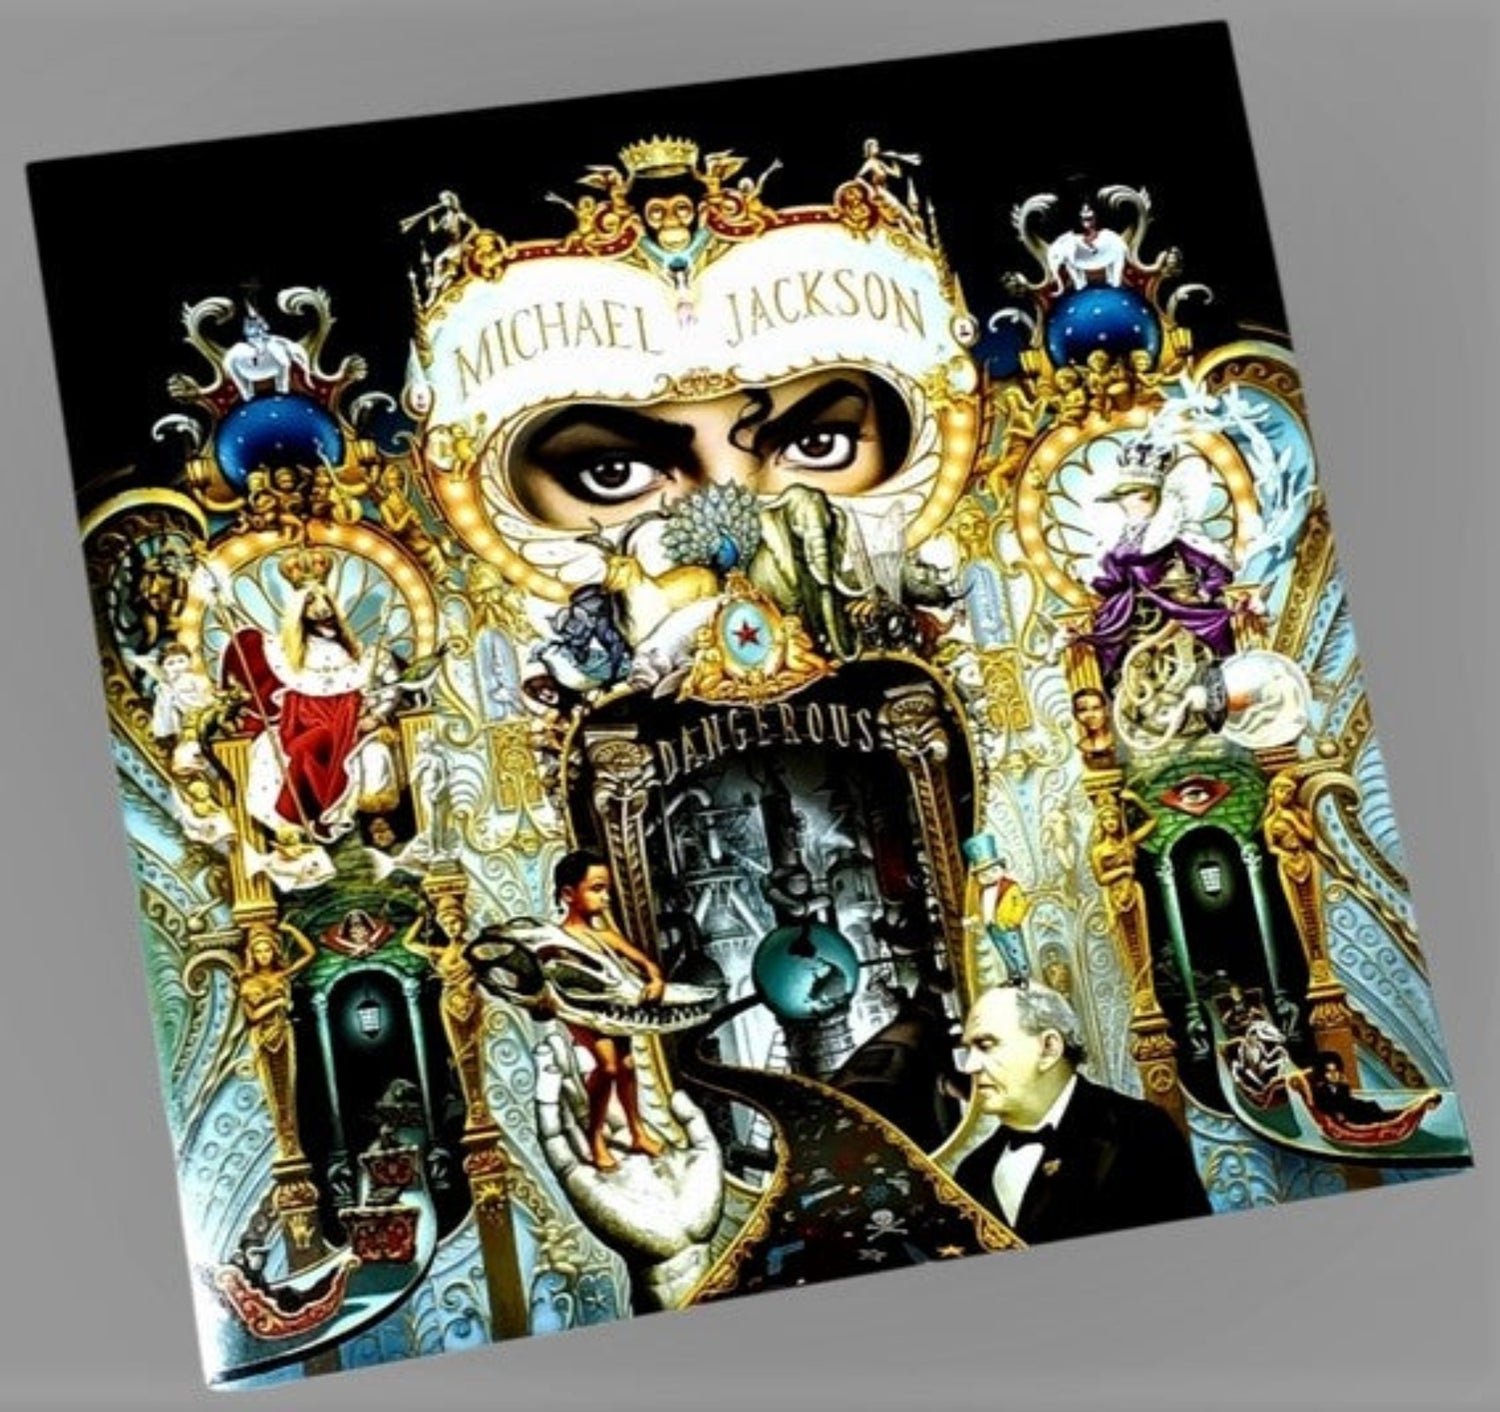 Michael Jackson Dangerous Album Wall Poster For Sale – AREA51GALLERY